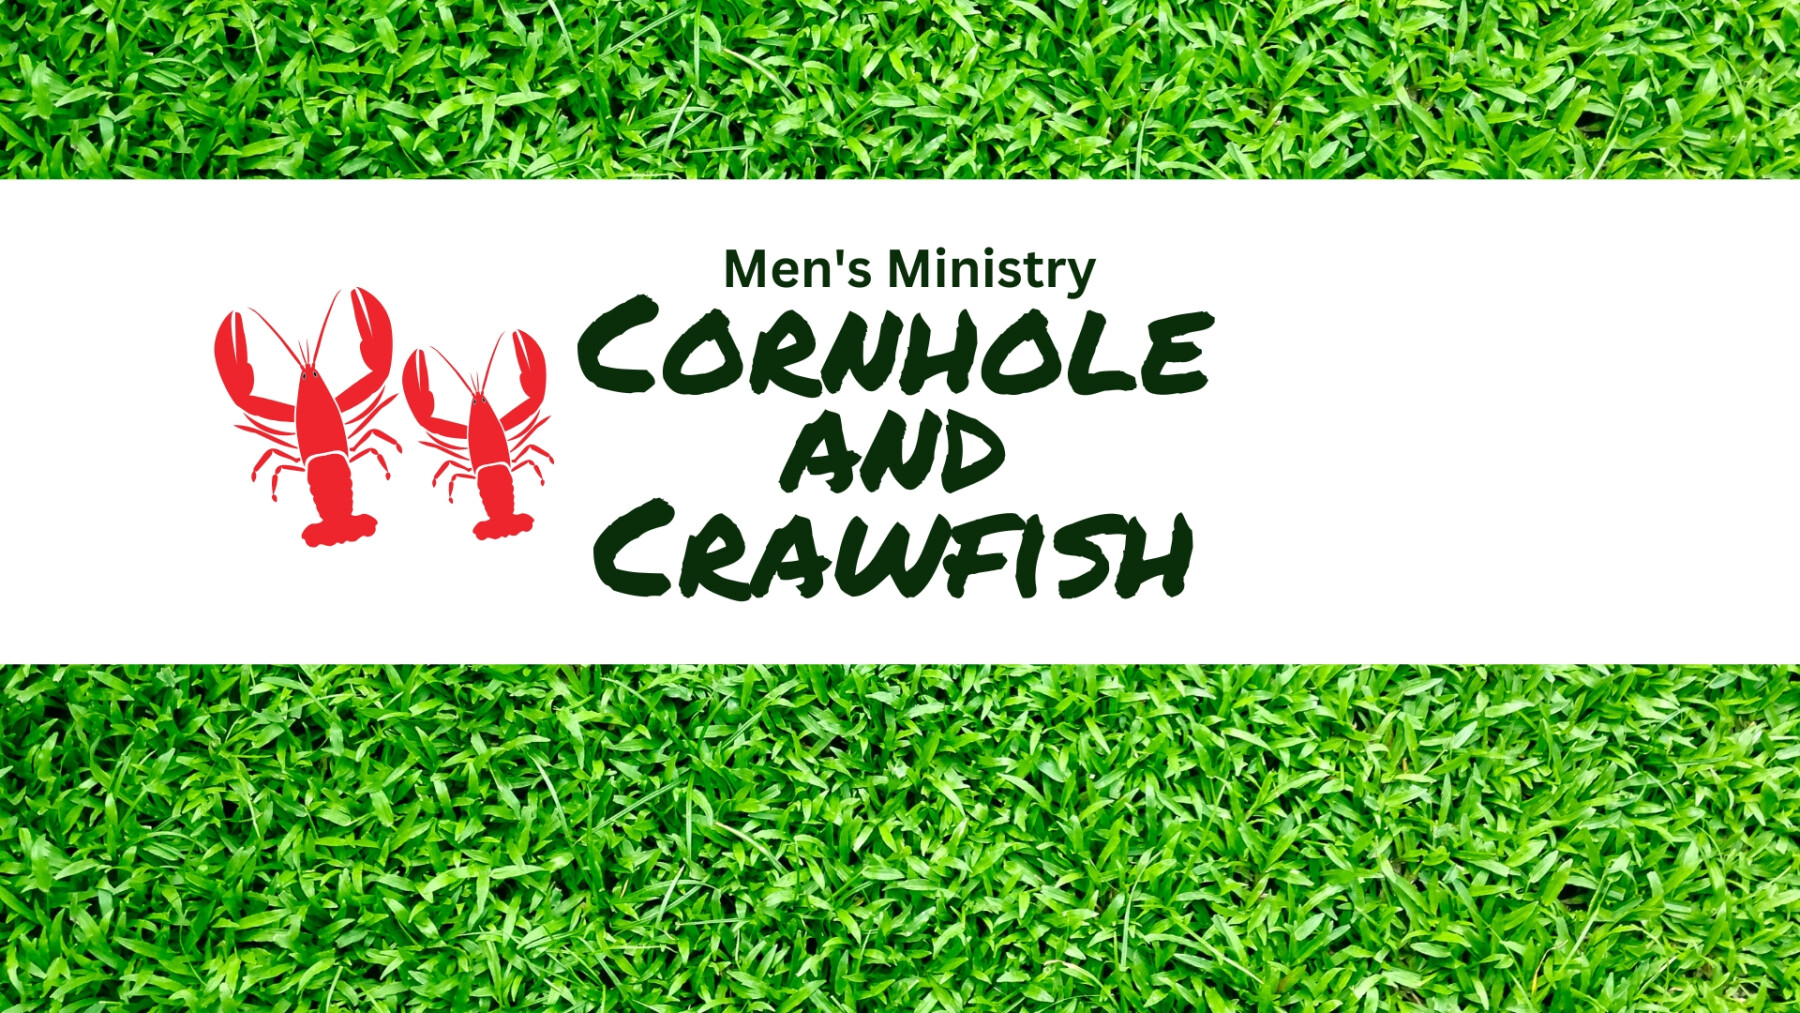 Cornhole and Crawfish (Men's Ministry)